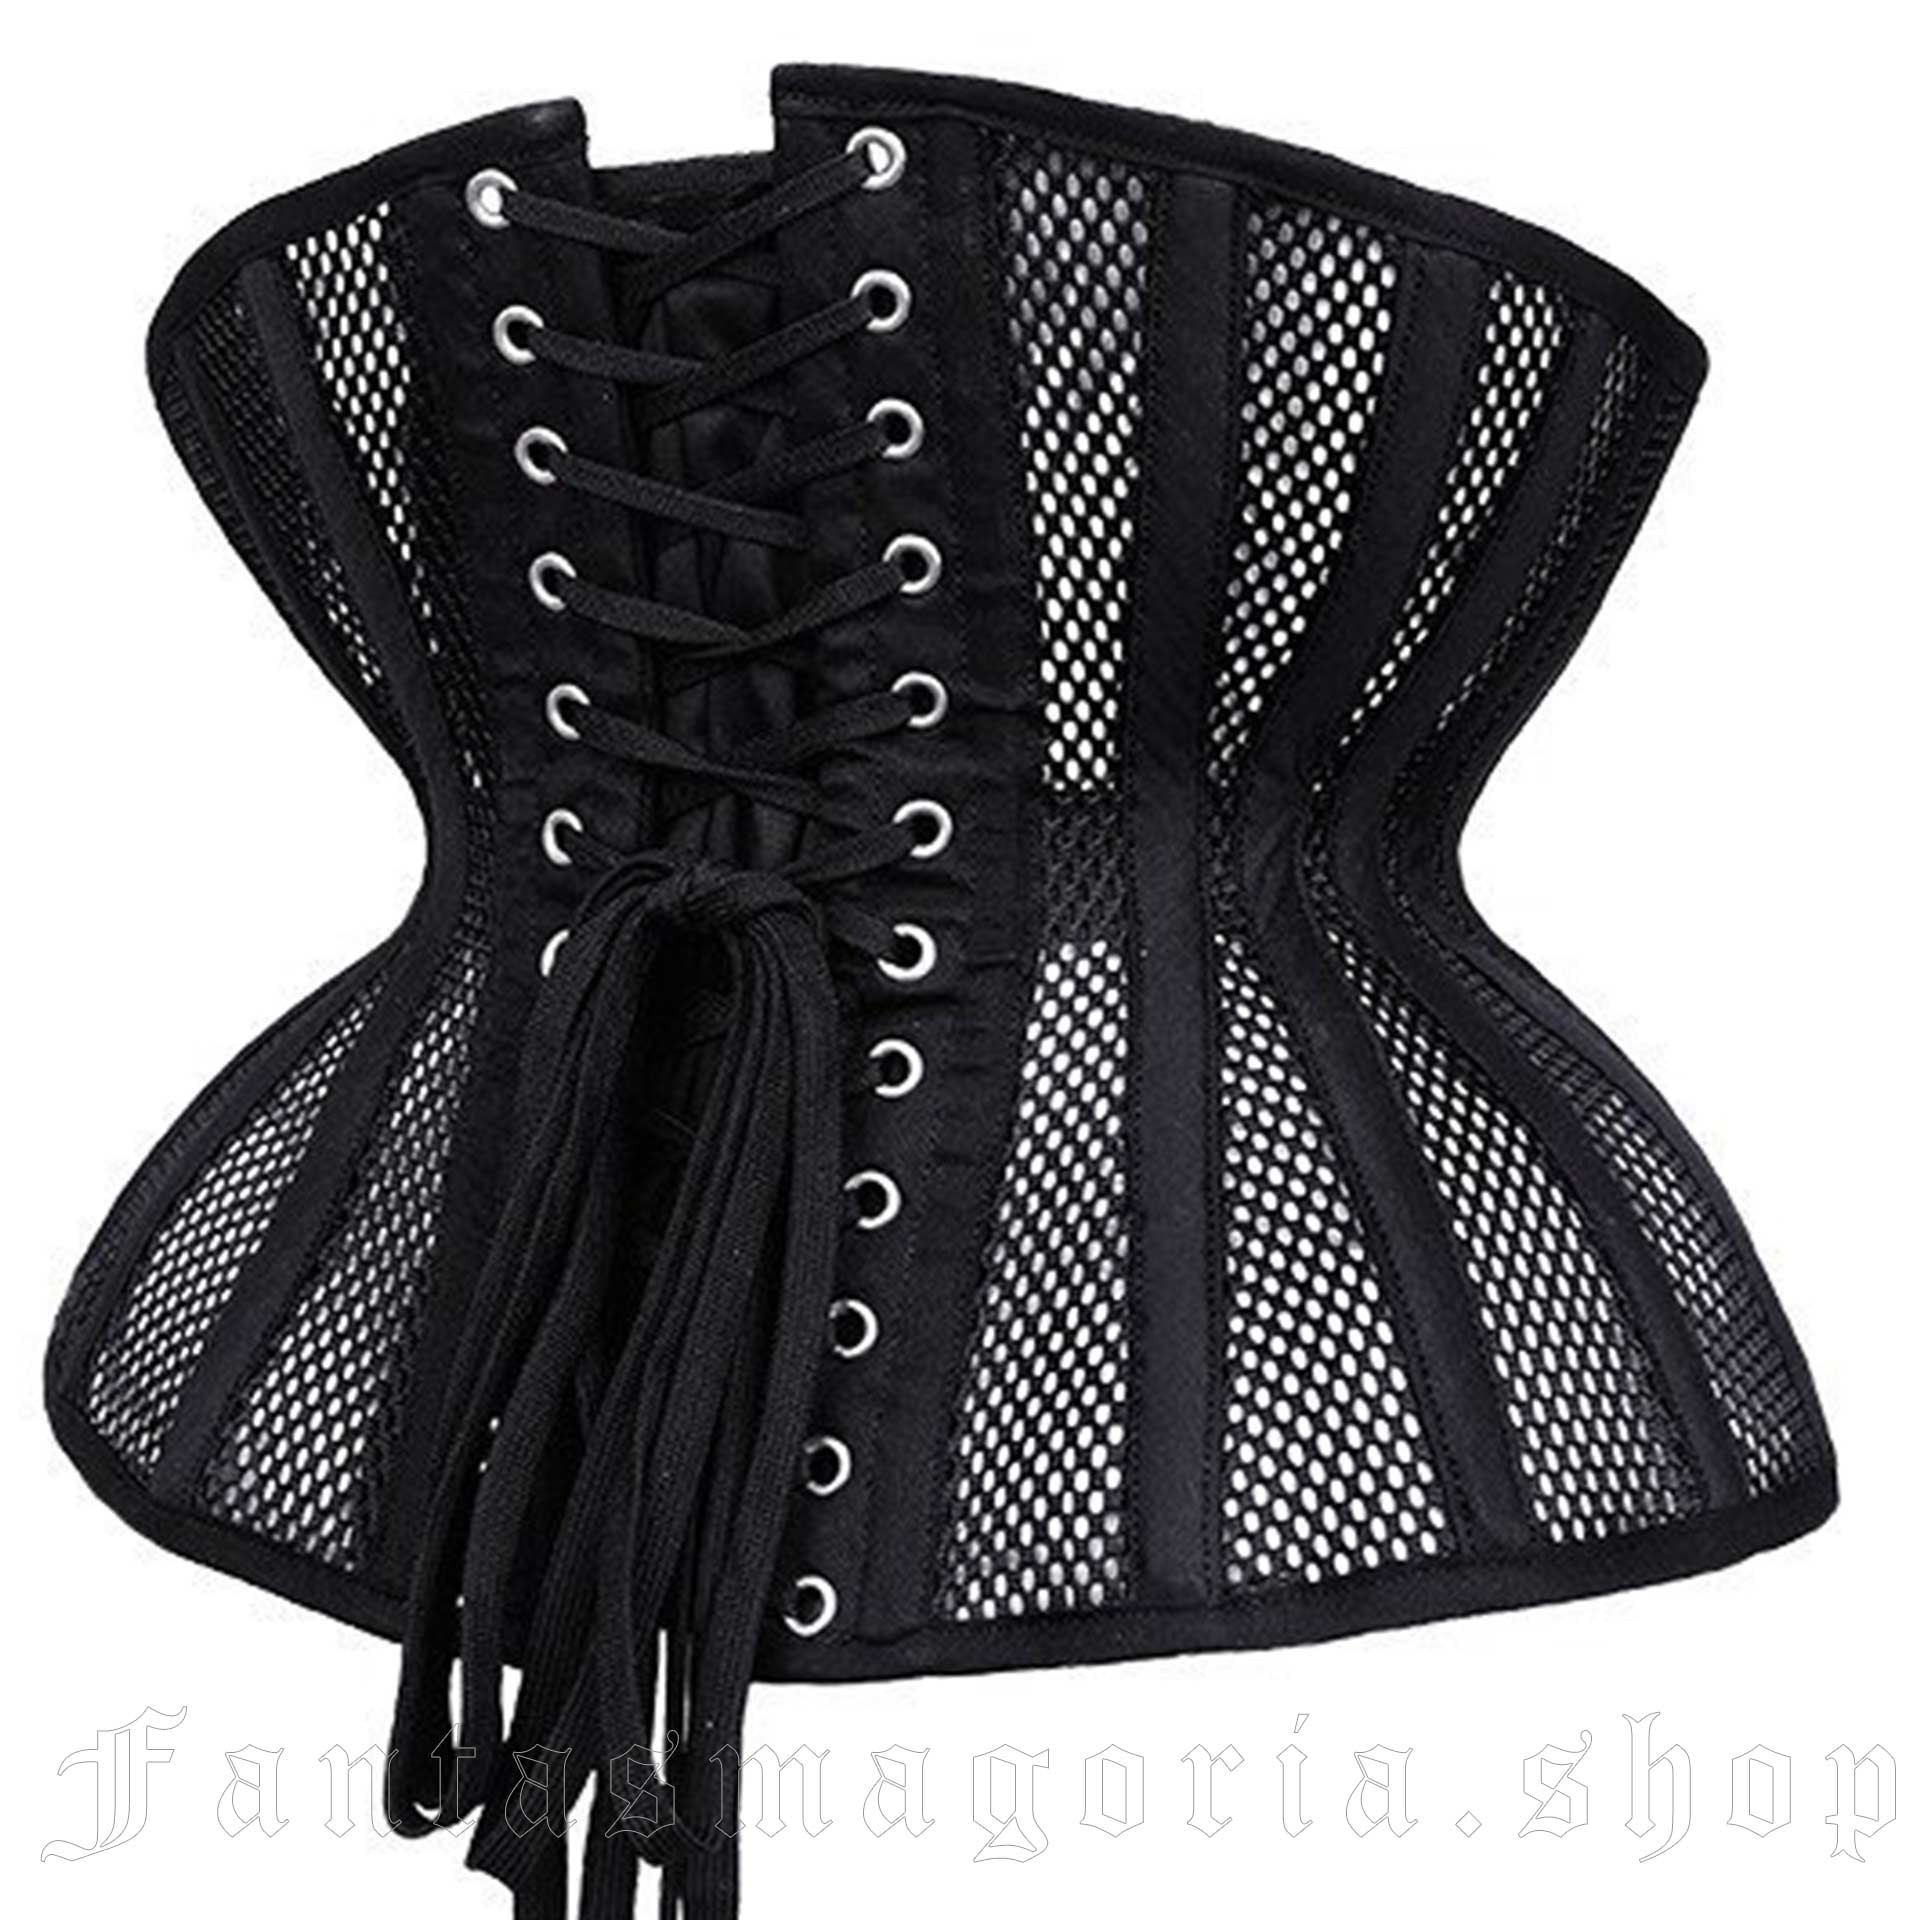 Women`s Gothic hourglass underbust corset.